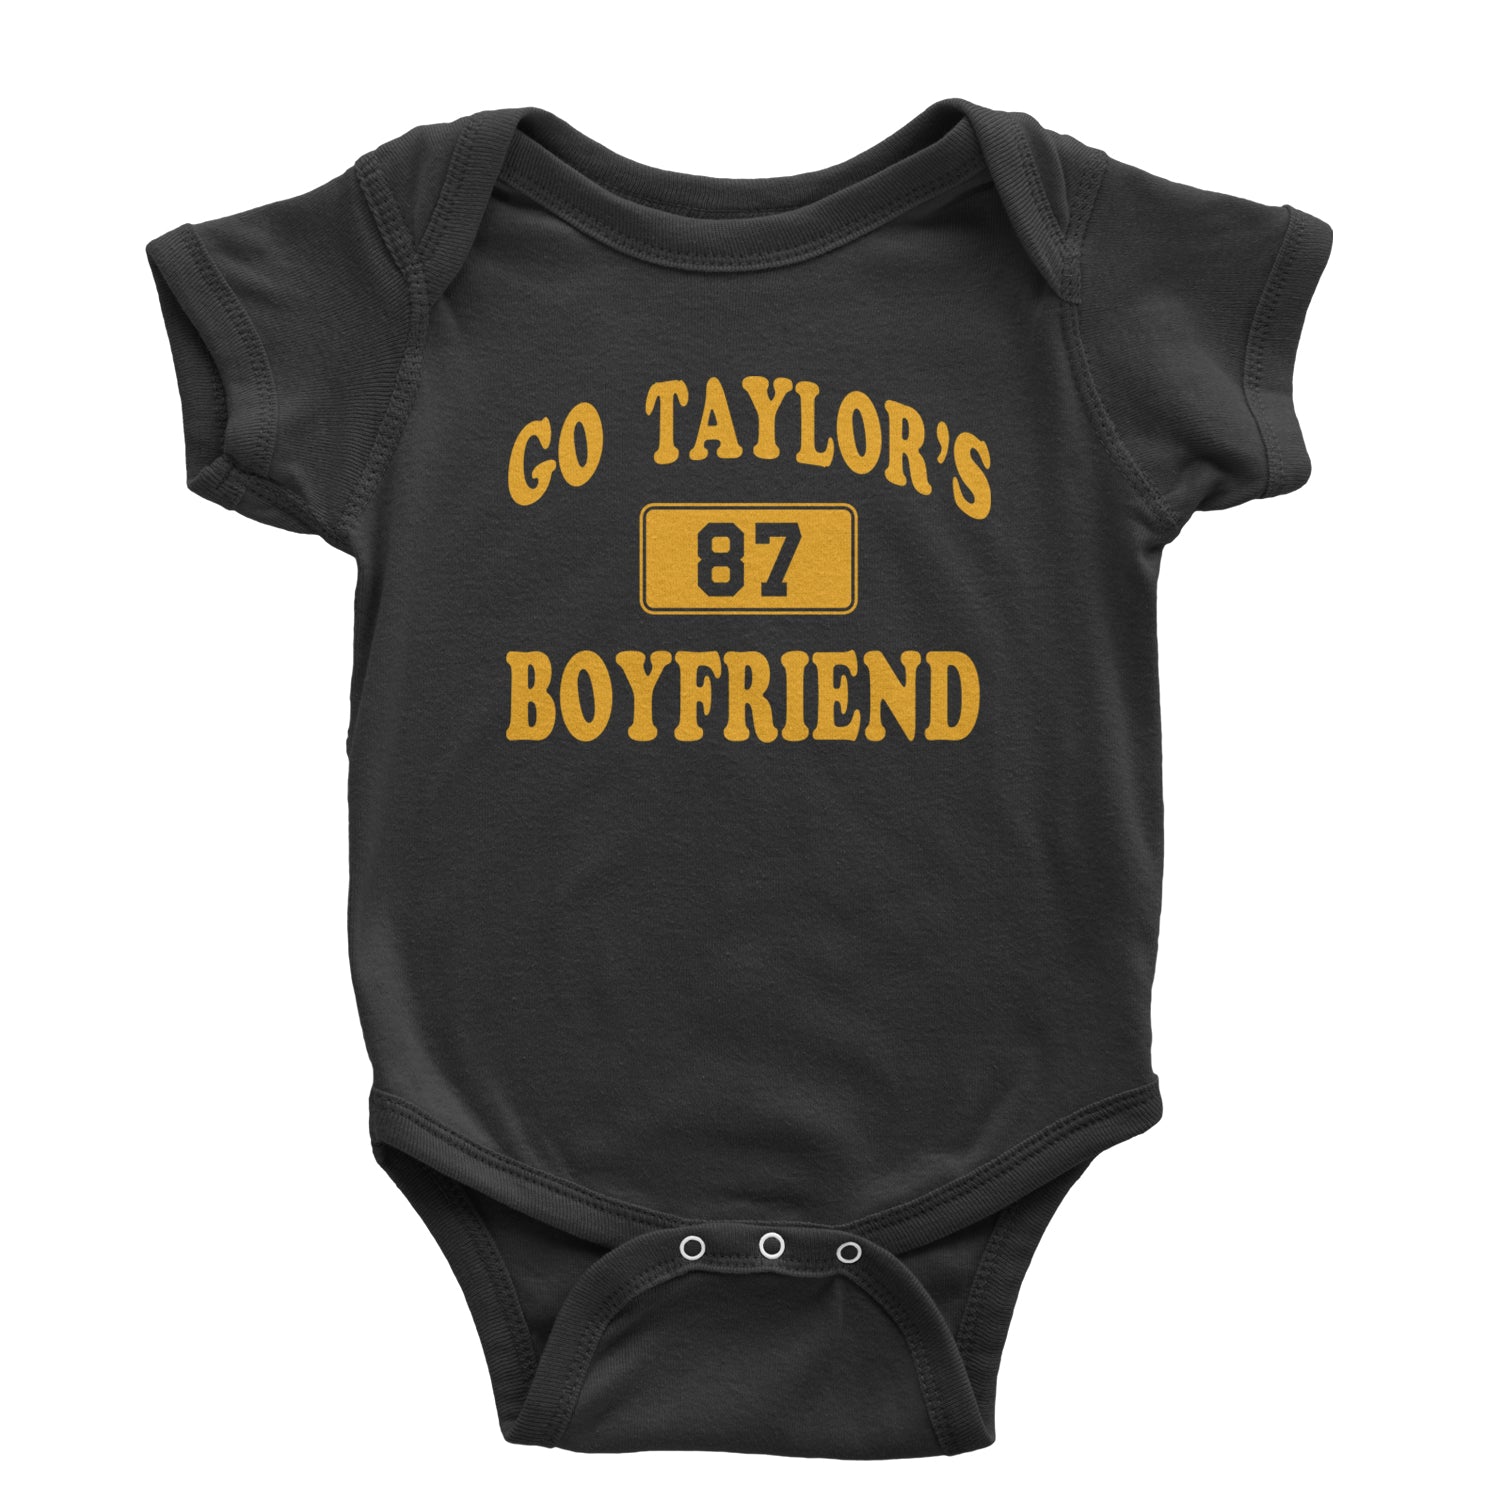 Go Taylor's Boyfriend Kansas City Infant One-Piece Romper Bodysuit and Toddler T-shirt